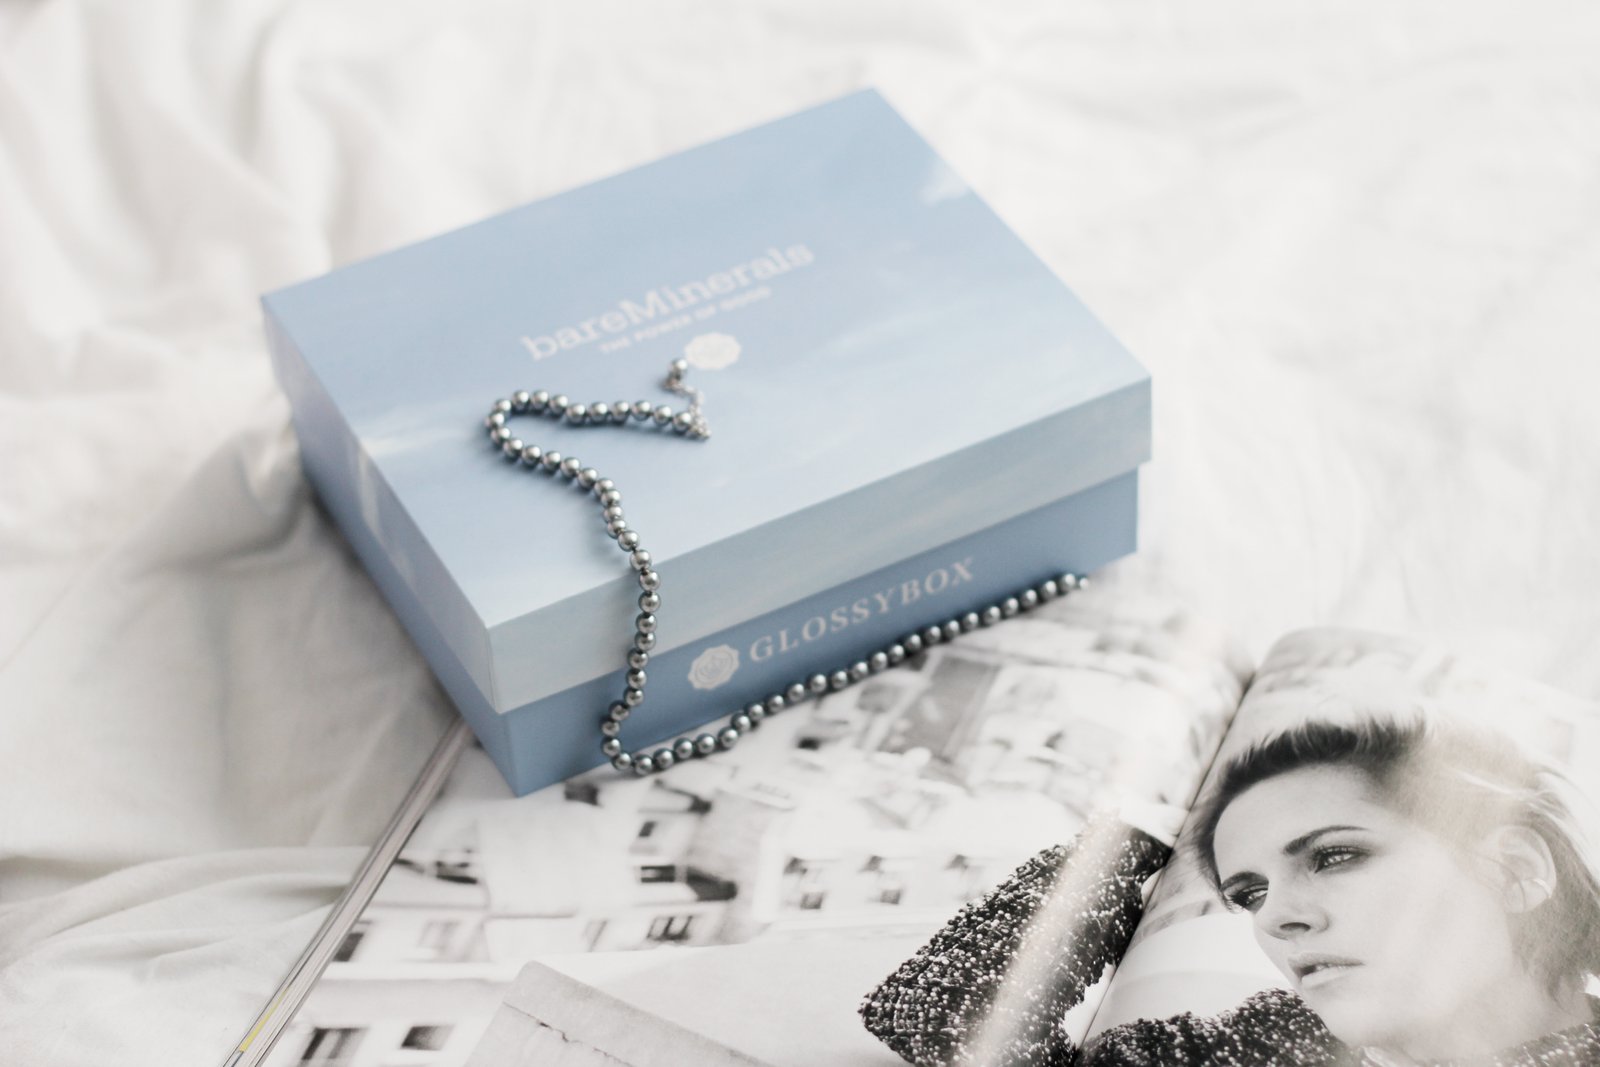 bareMinerals x GlossyBox Limited Edition Box | Ms Tantrum Blog